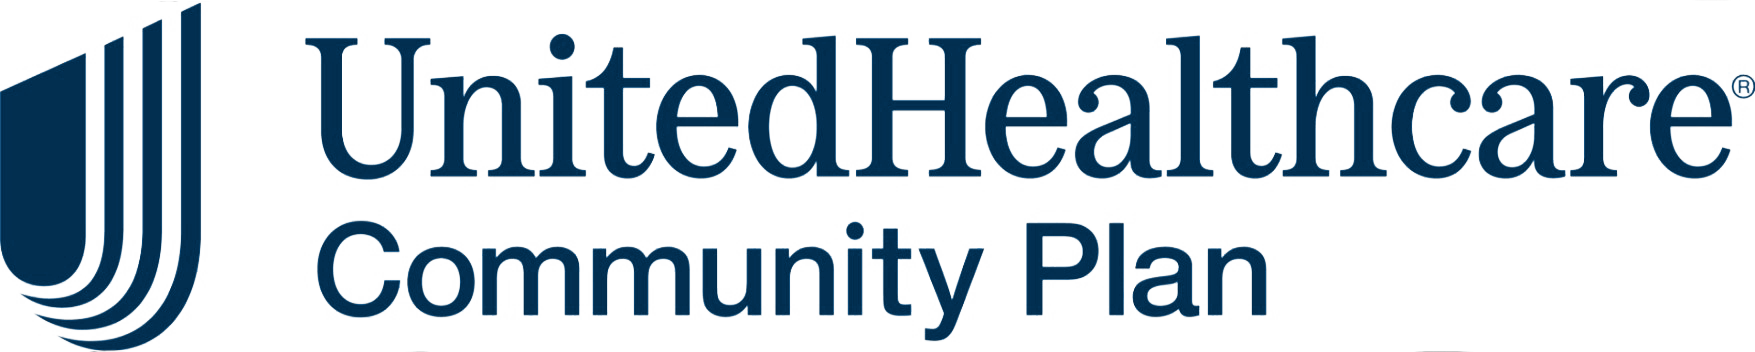 United Healthcare Community Plan insurance logo